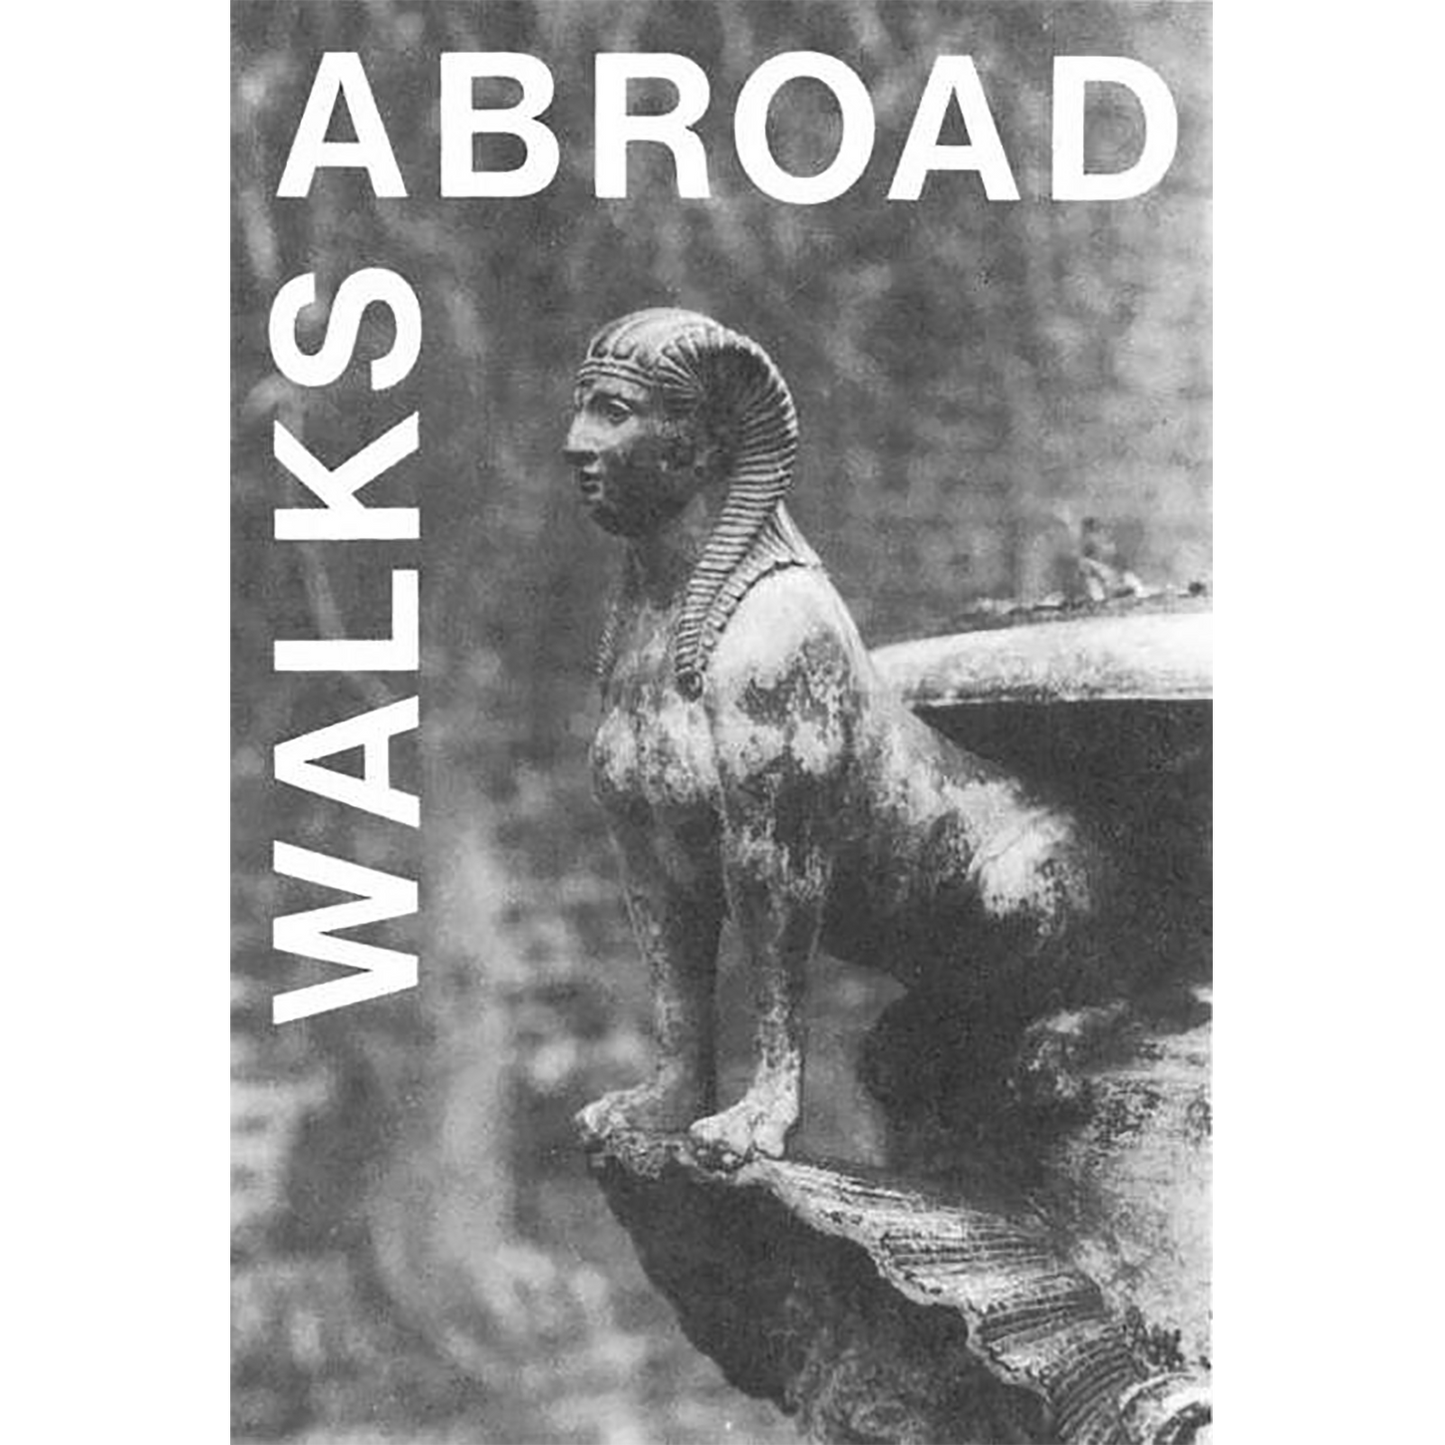 Janet Sherbourne & Mark Lockett - Walks Abroad(Cassette)